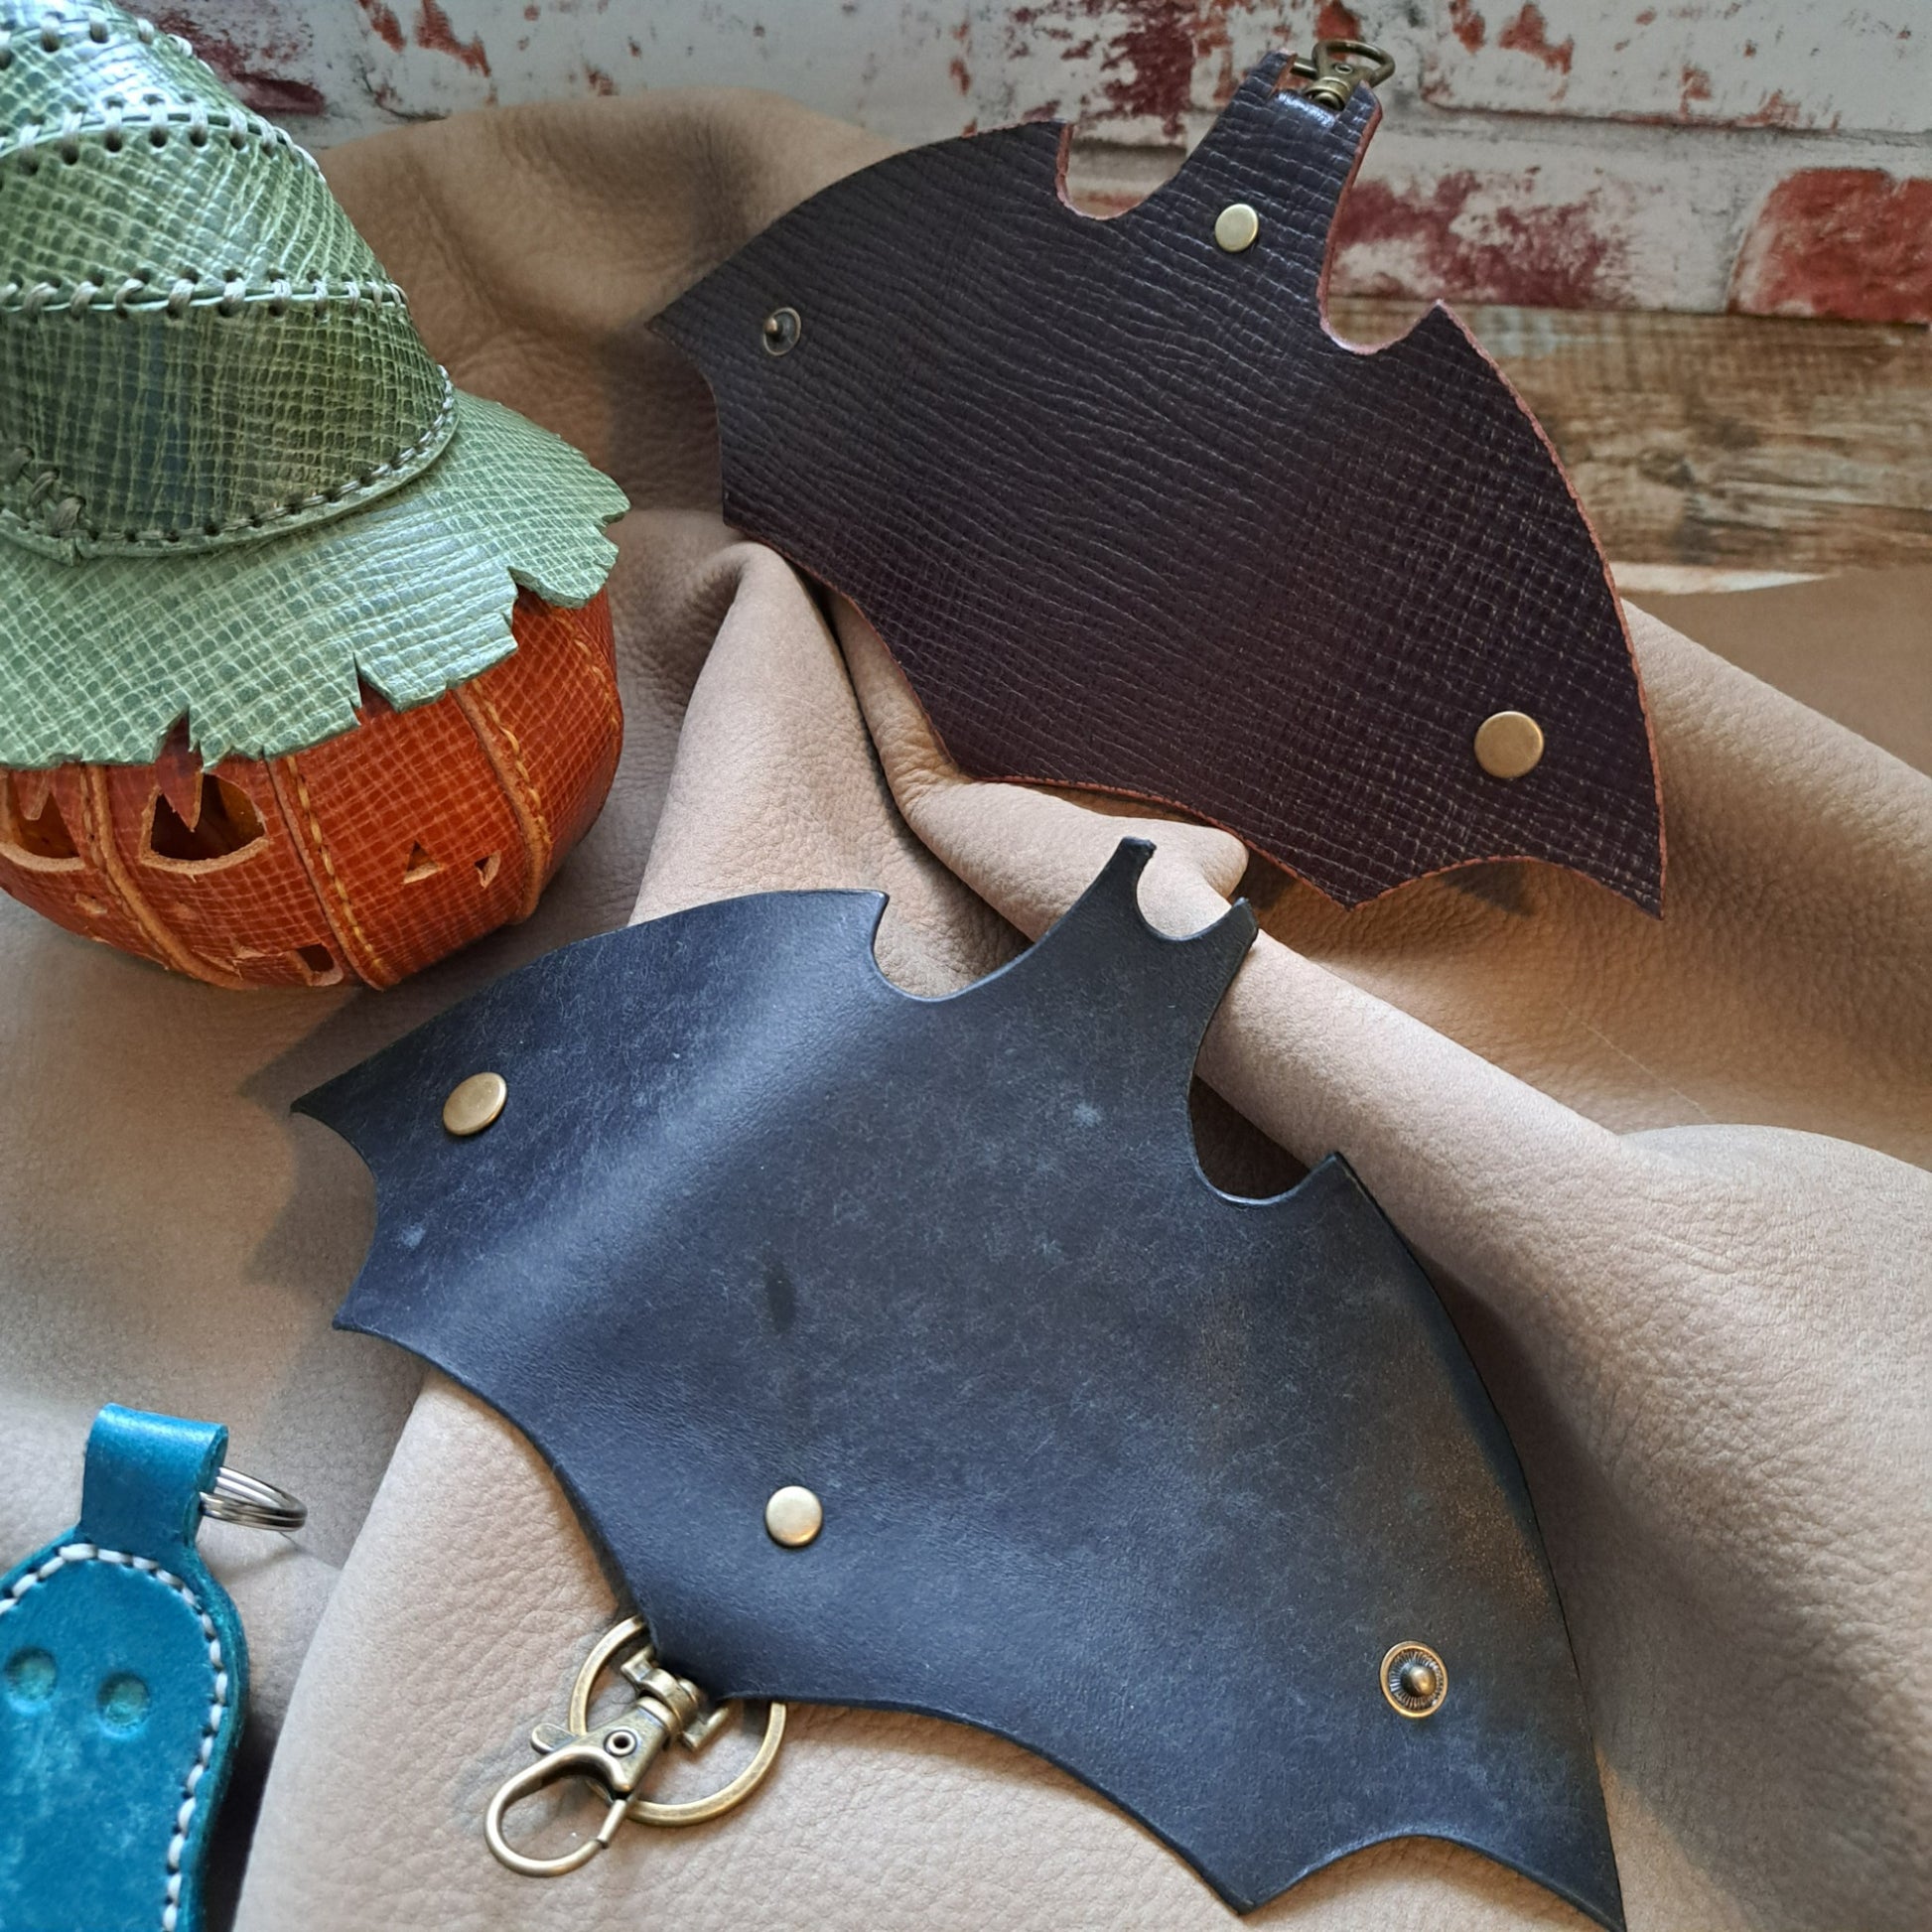 rgc handmade crafts halloween keyring bat-1a (5)